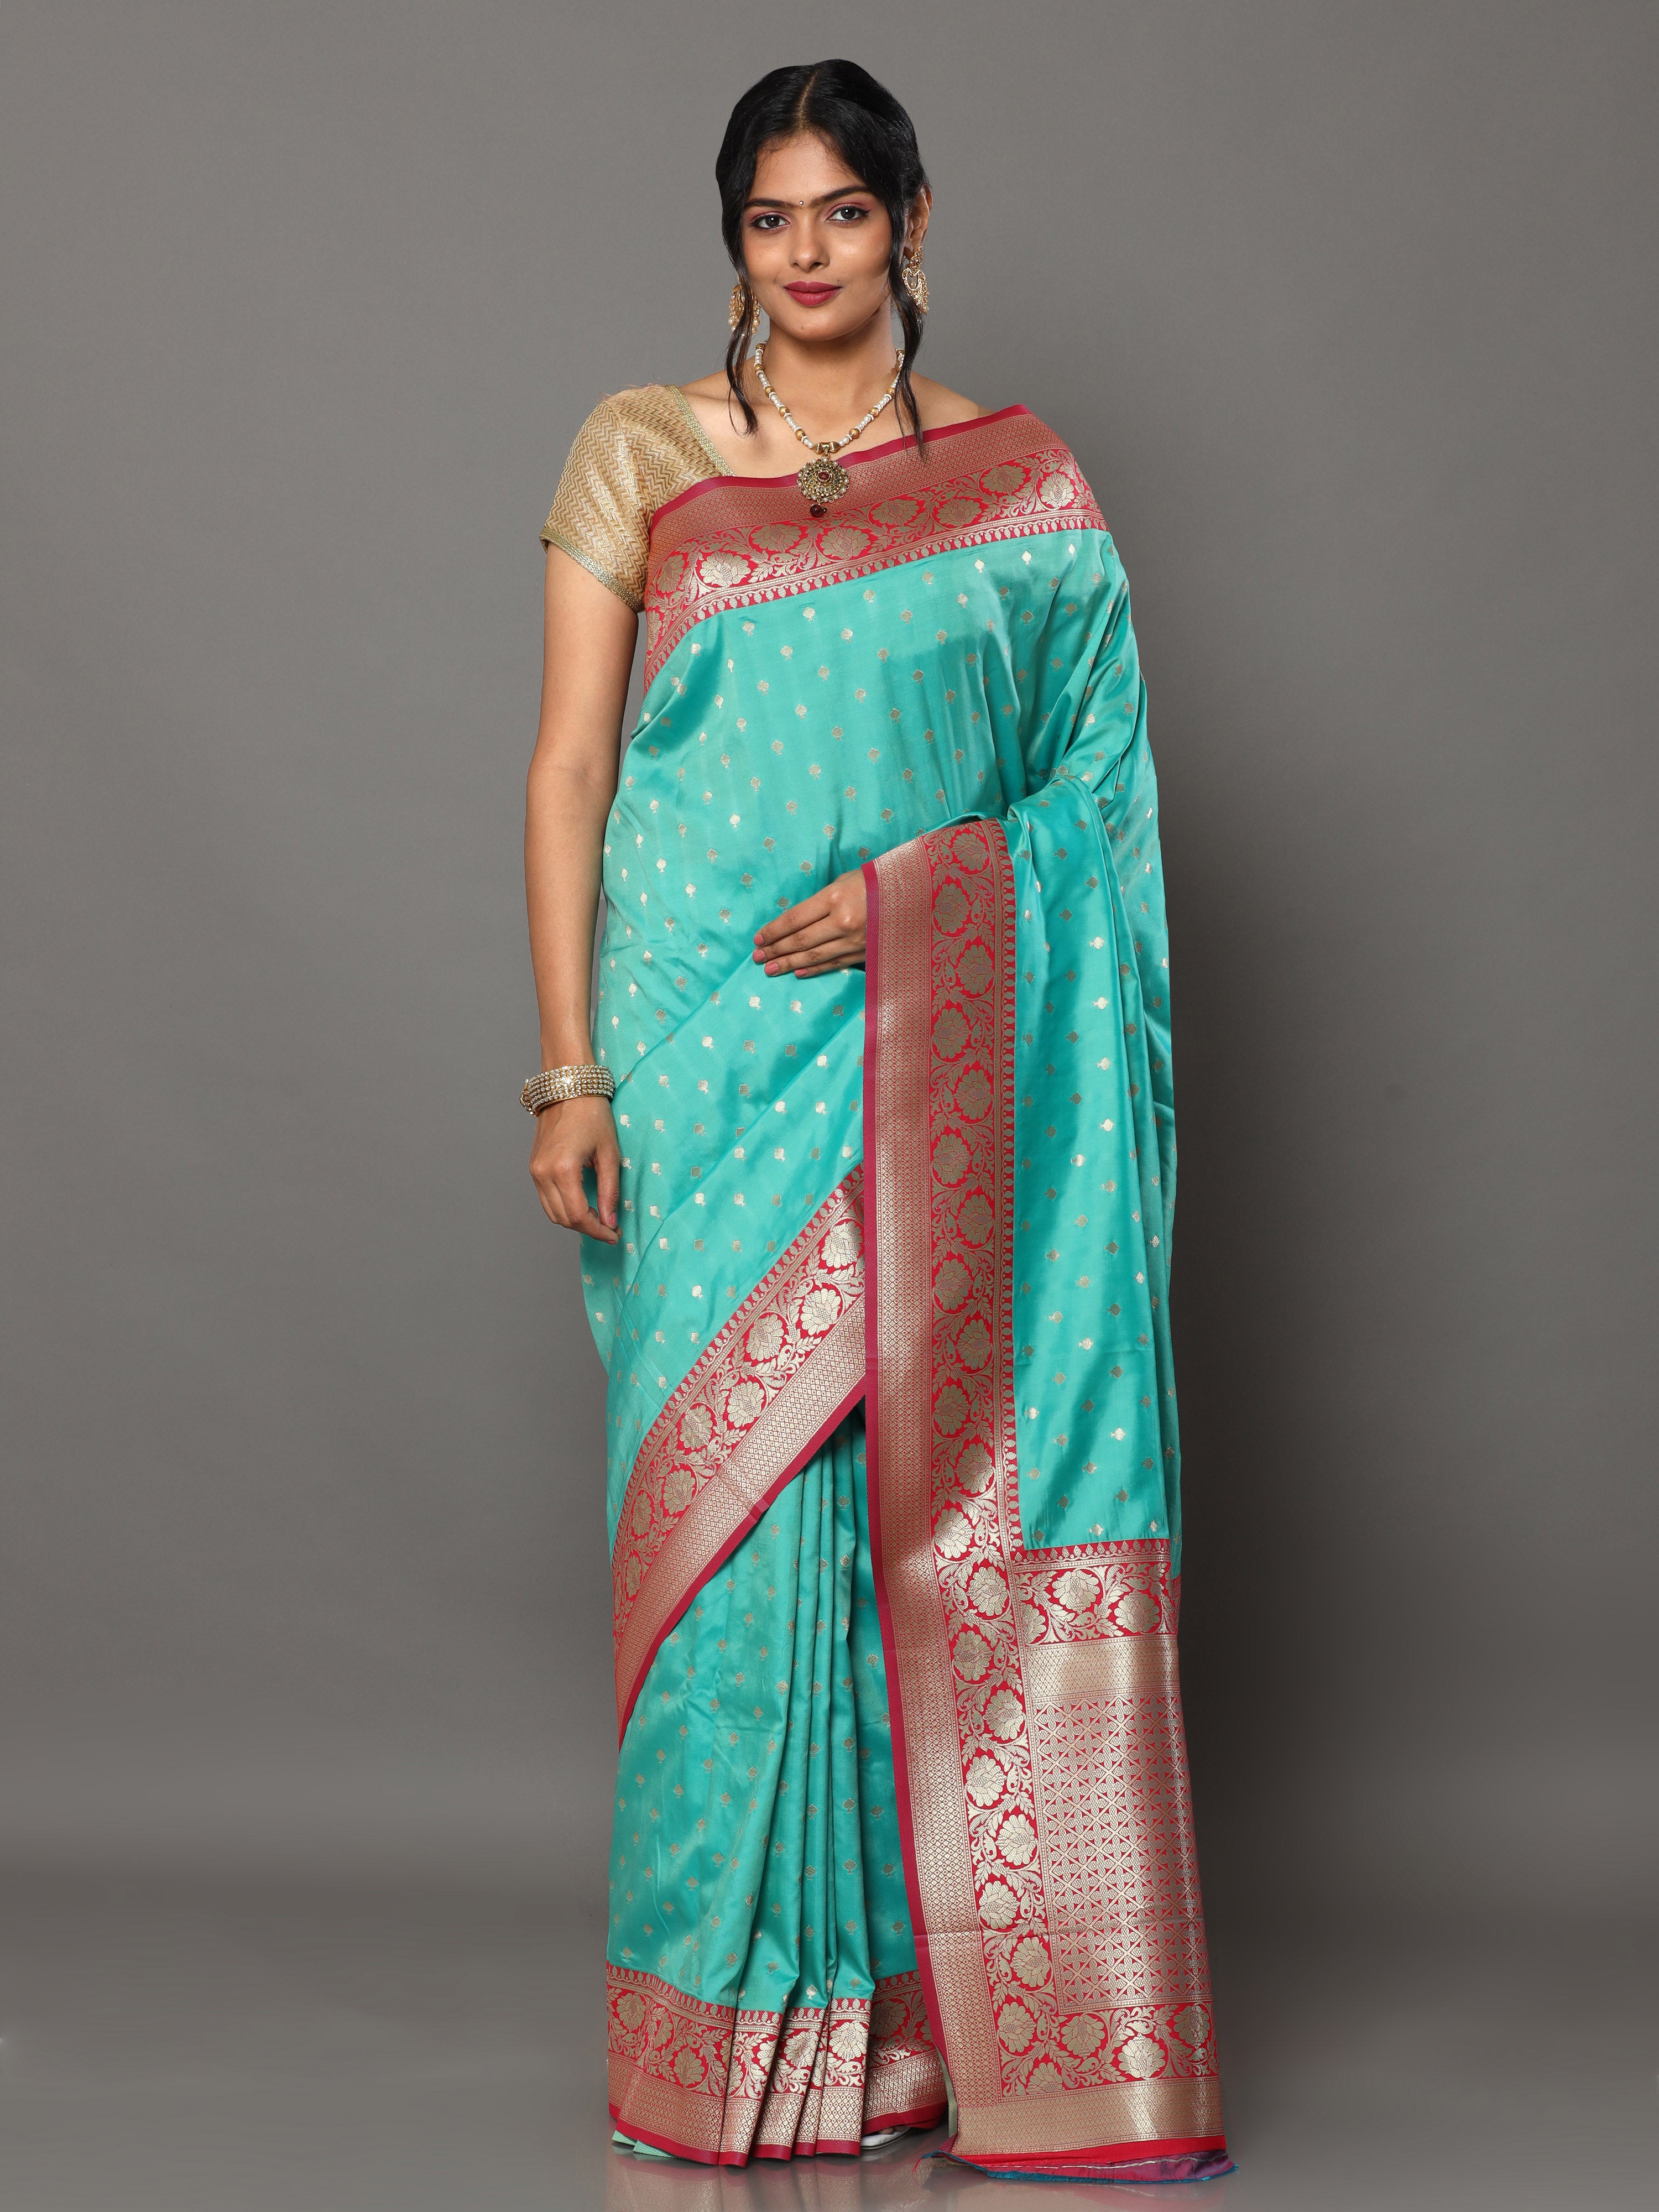 HerClozet Women's Katan soft Banarasi silk saree -6.3 Mtr(Turquoise Green;Red)